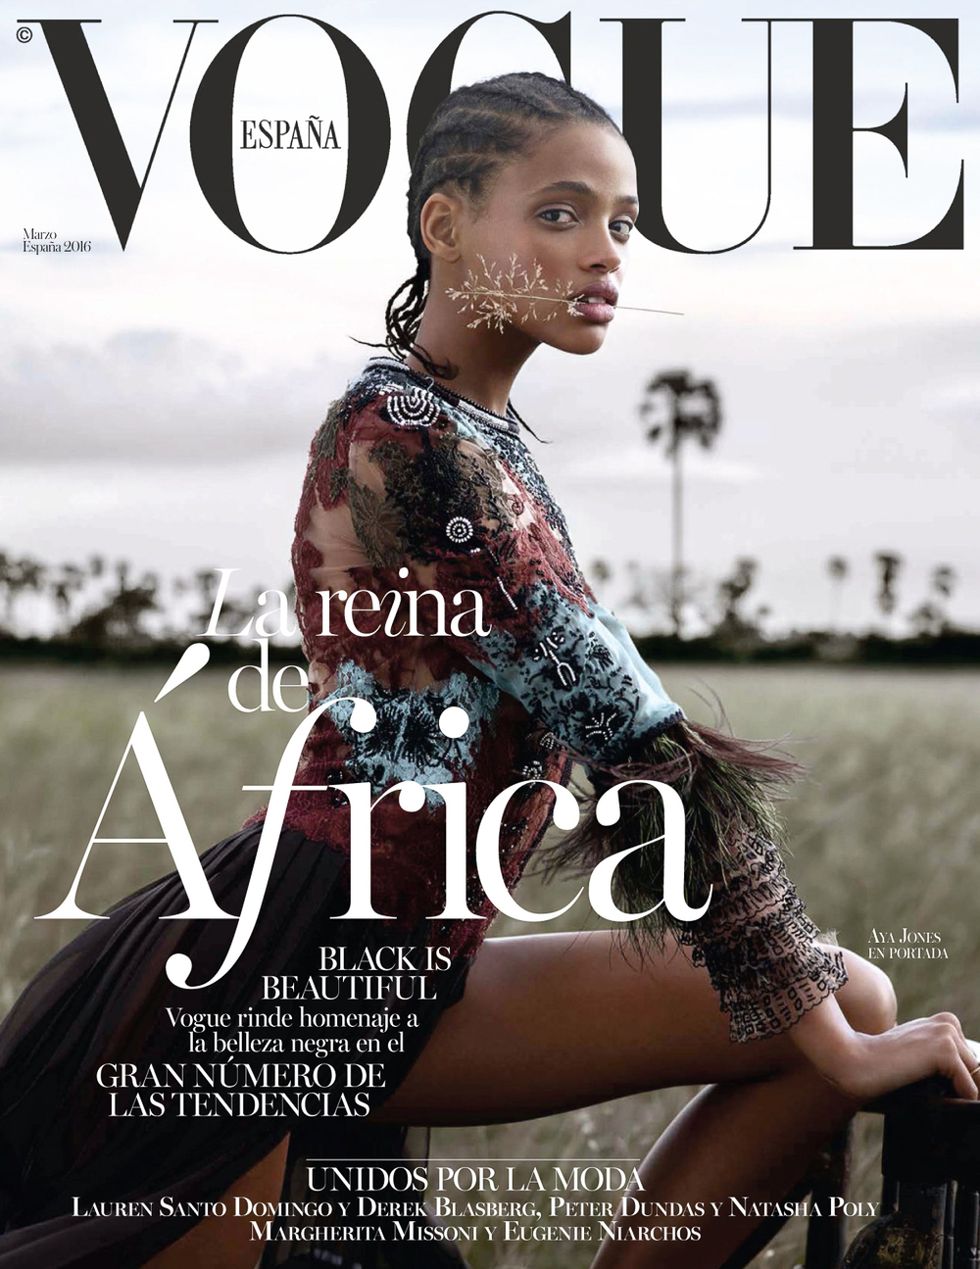 ‘Black Is Beautiful’: Ivorian-British Model Aya Jones Slays In Cornrows On The Cover Of Vogue Spain